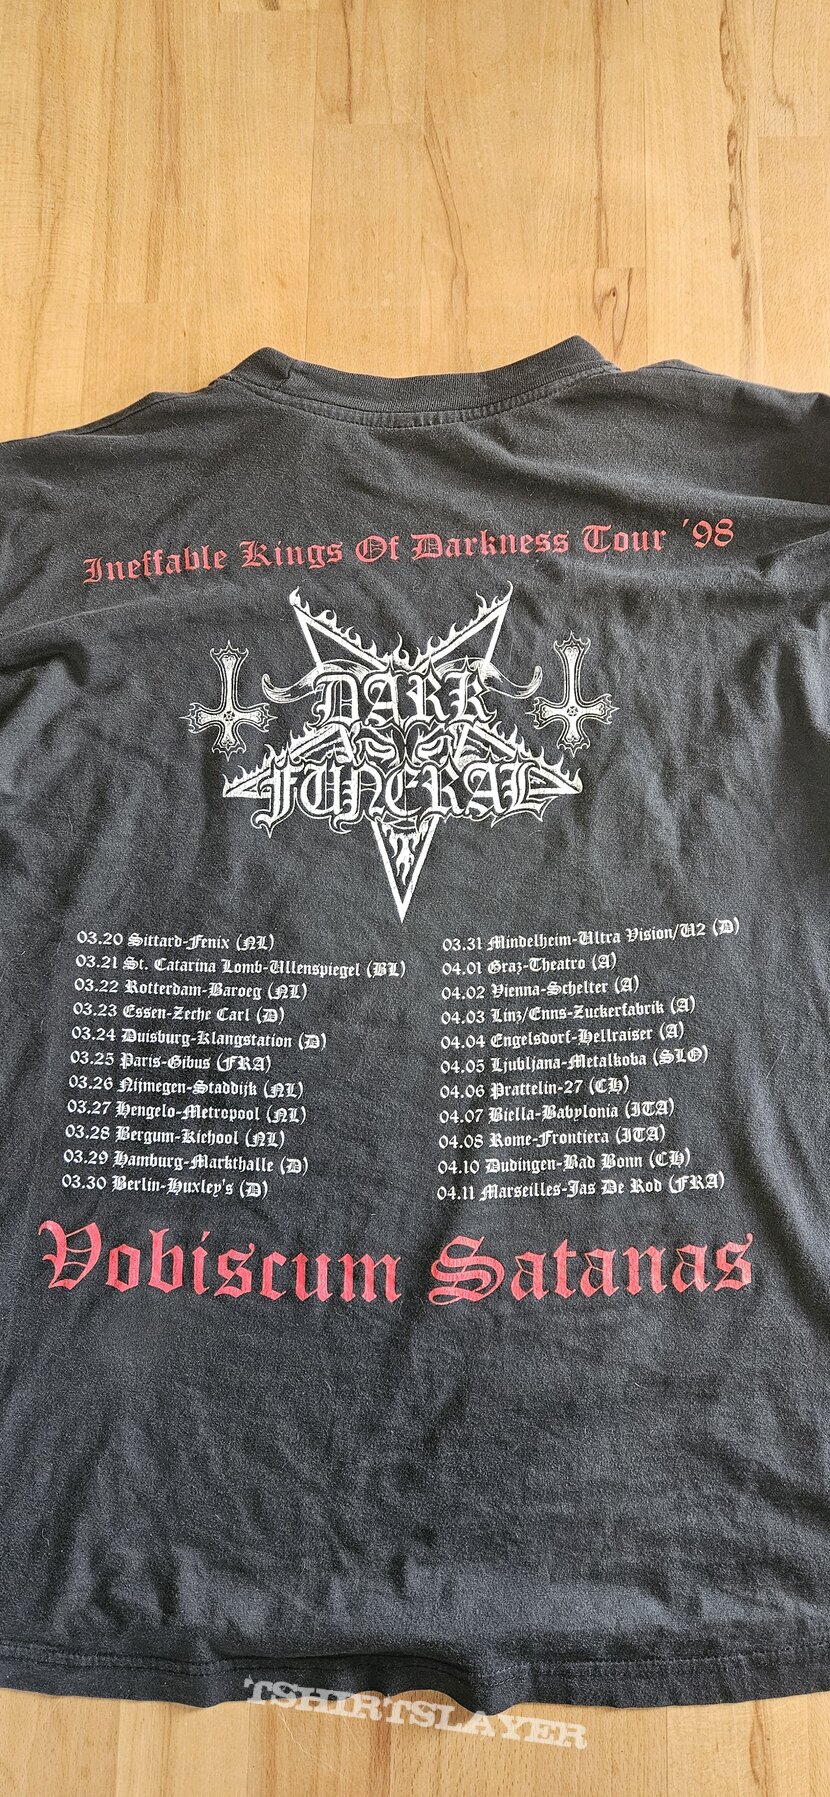 Dark Funeral Tour 1998